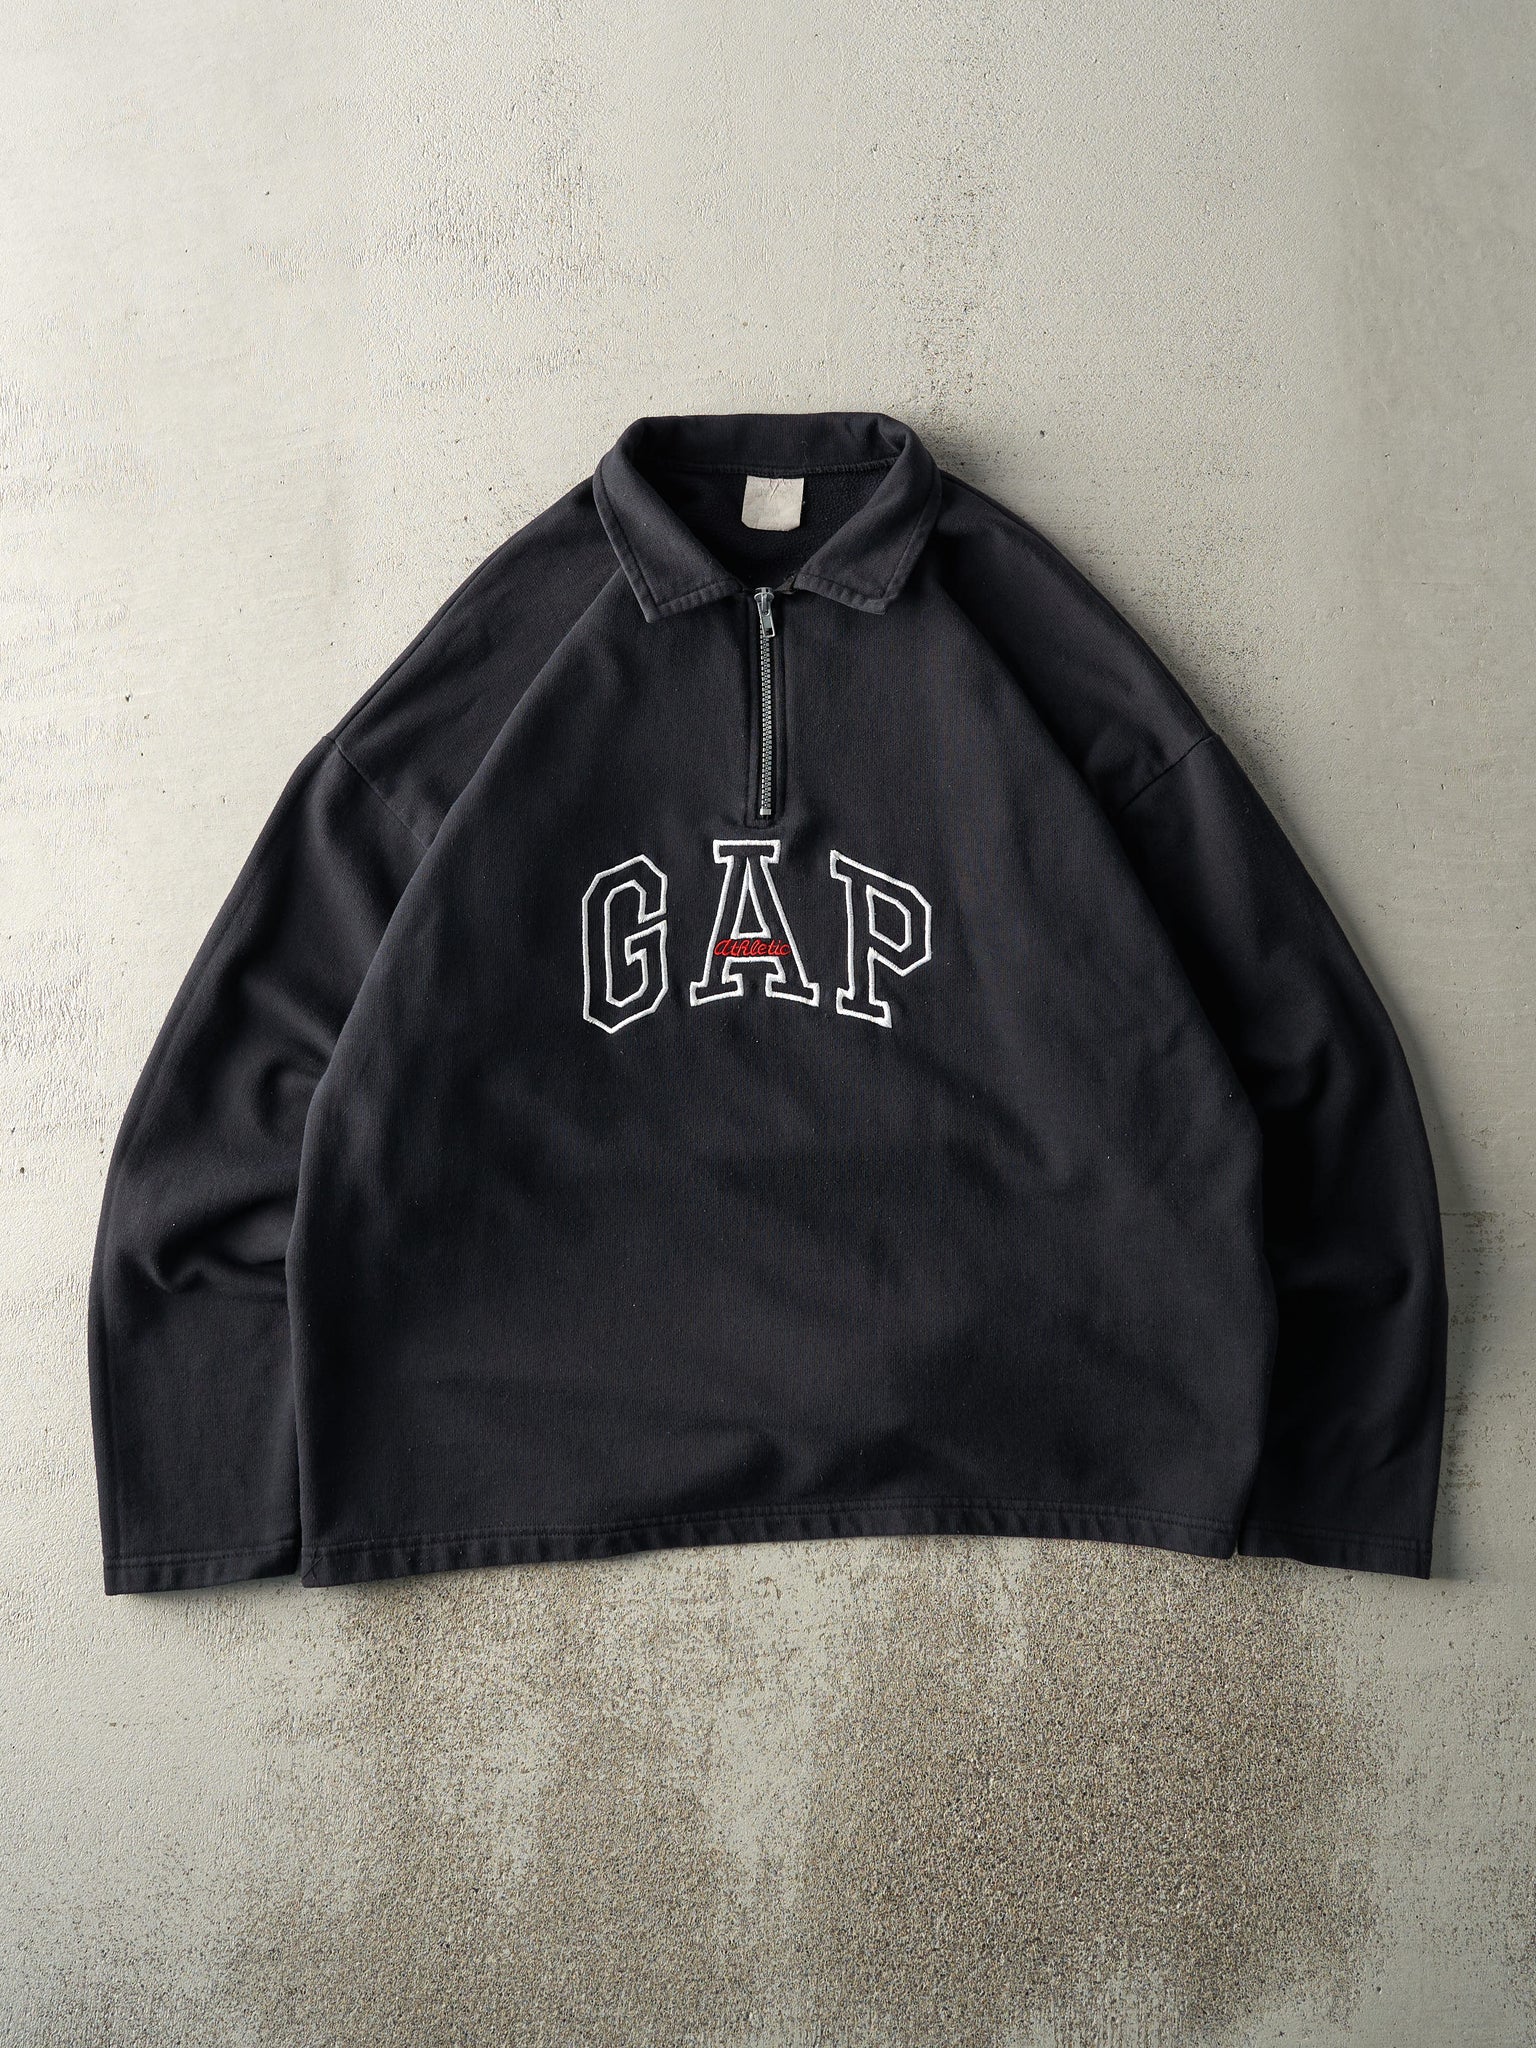 Vintage 90s Embroidered Gap Athletic Quarter Zip Sweatshirt (XL)